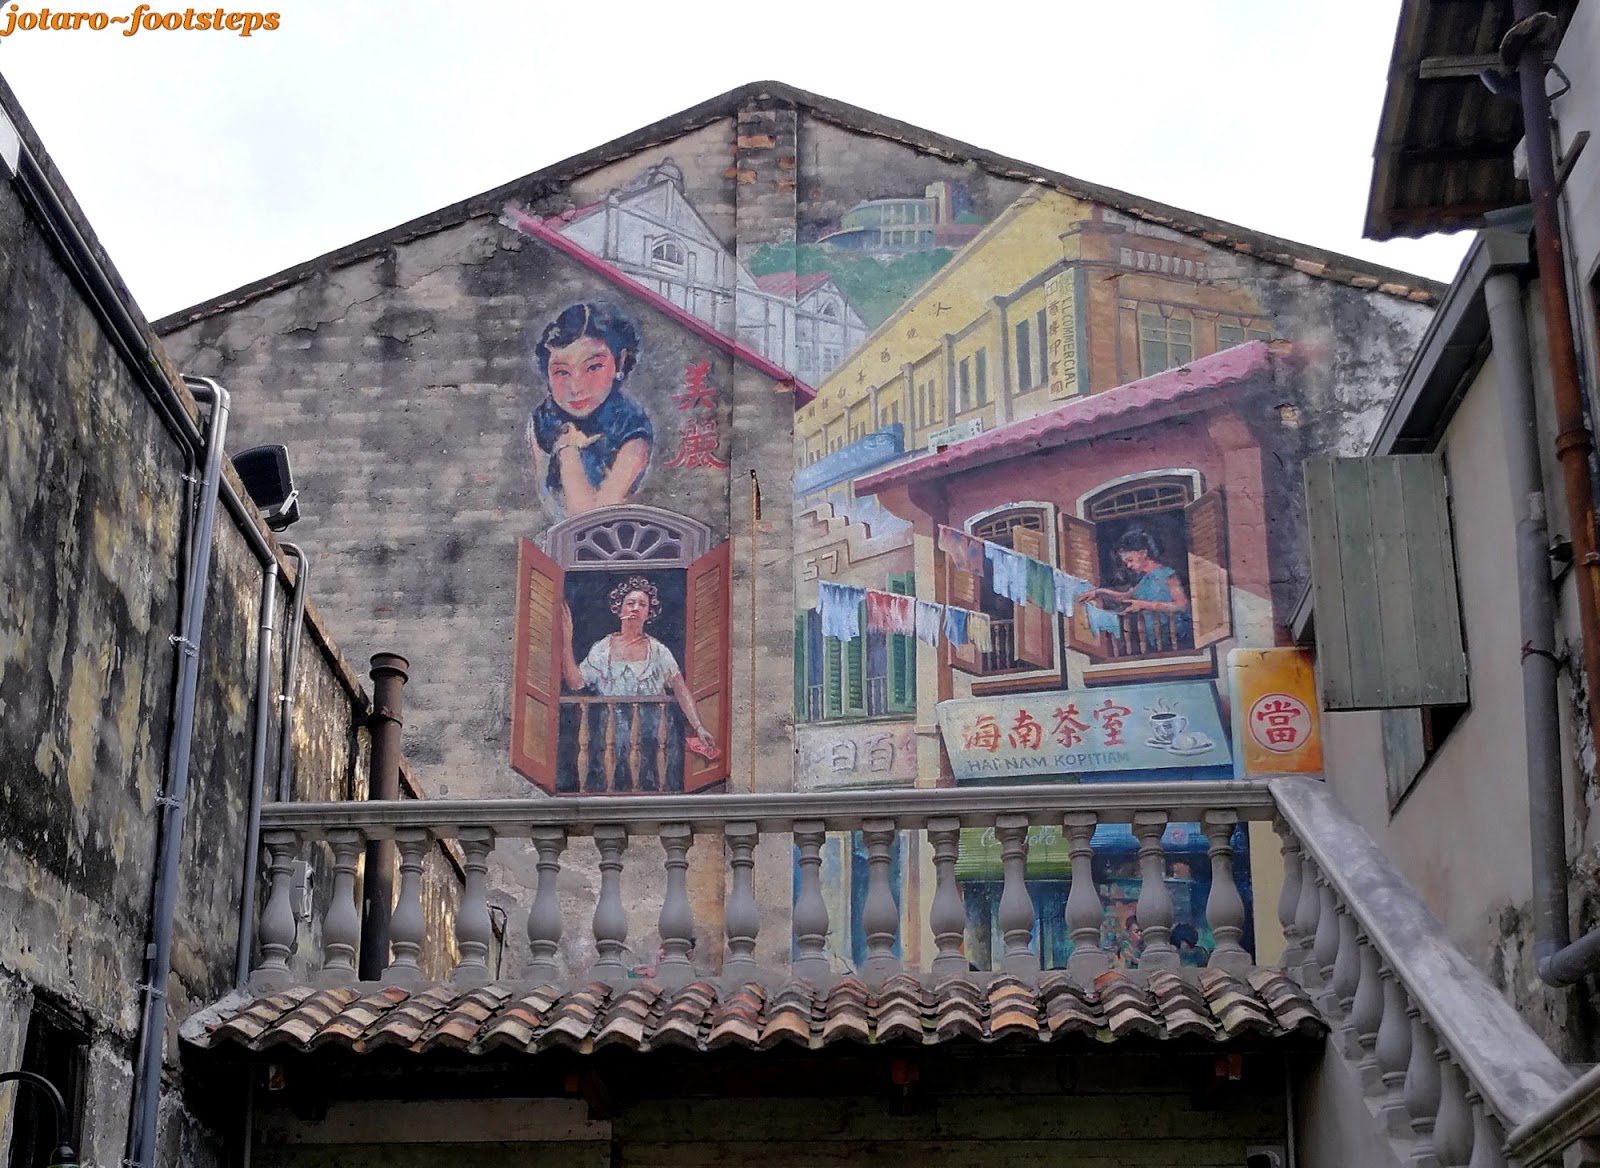 Footsteps Jotaro S Travels Art Gallery Street Art Kwai Chai Hong 鬼仔巷 Petaling Street A Step Into The Past